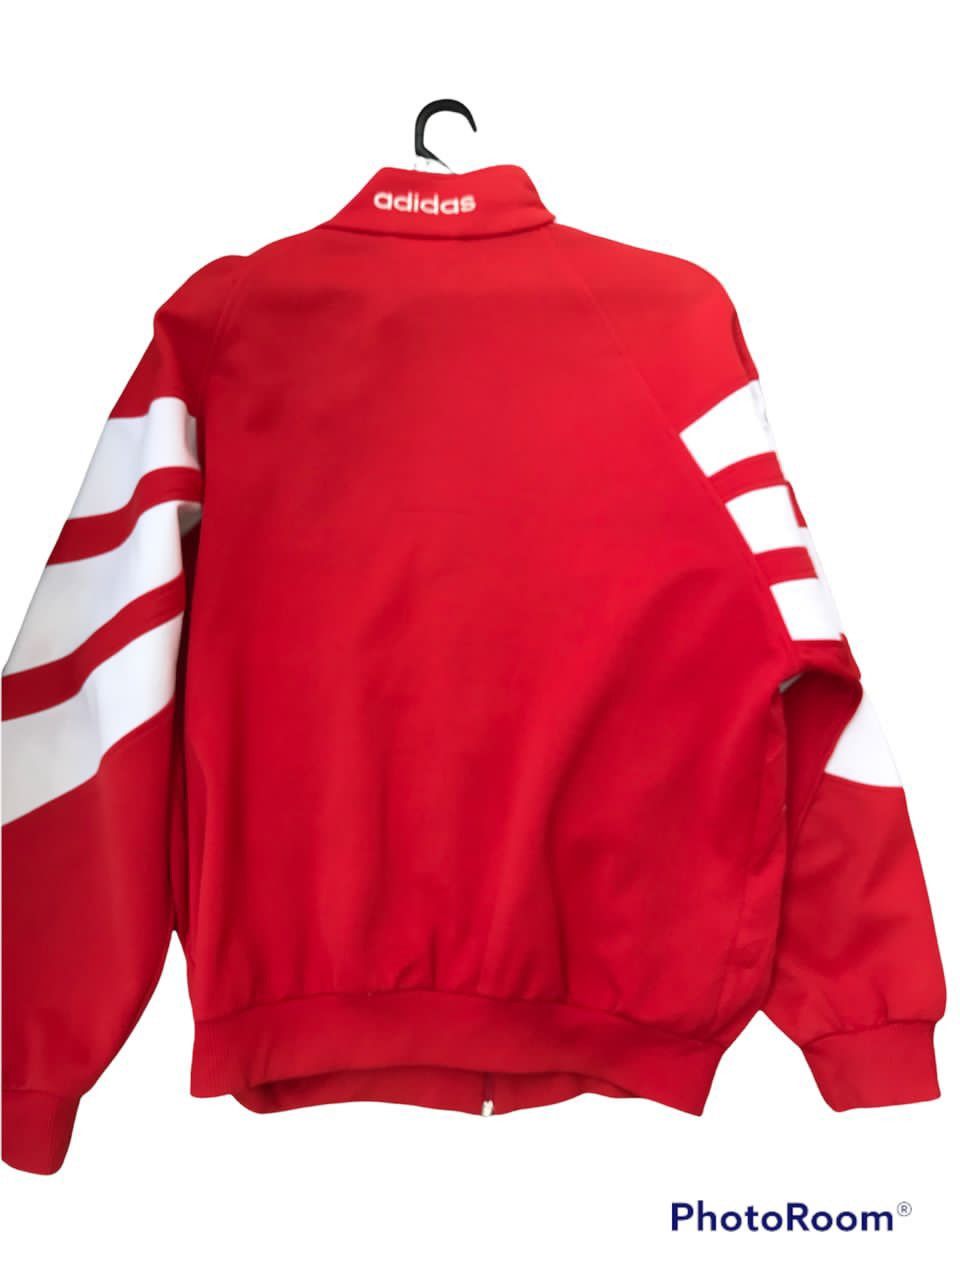 Adidas Vintage 90s Adidas As Roma Sweater Size US L / EU 52-54 / 3 - 7 Thumbnail